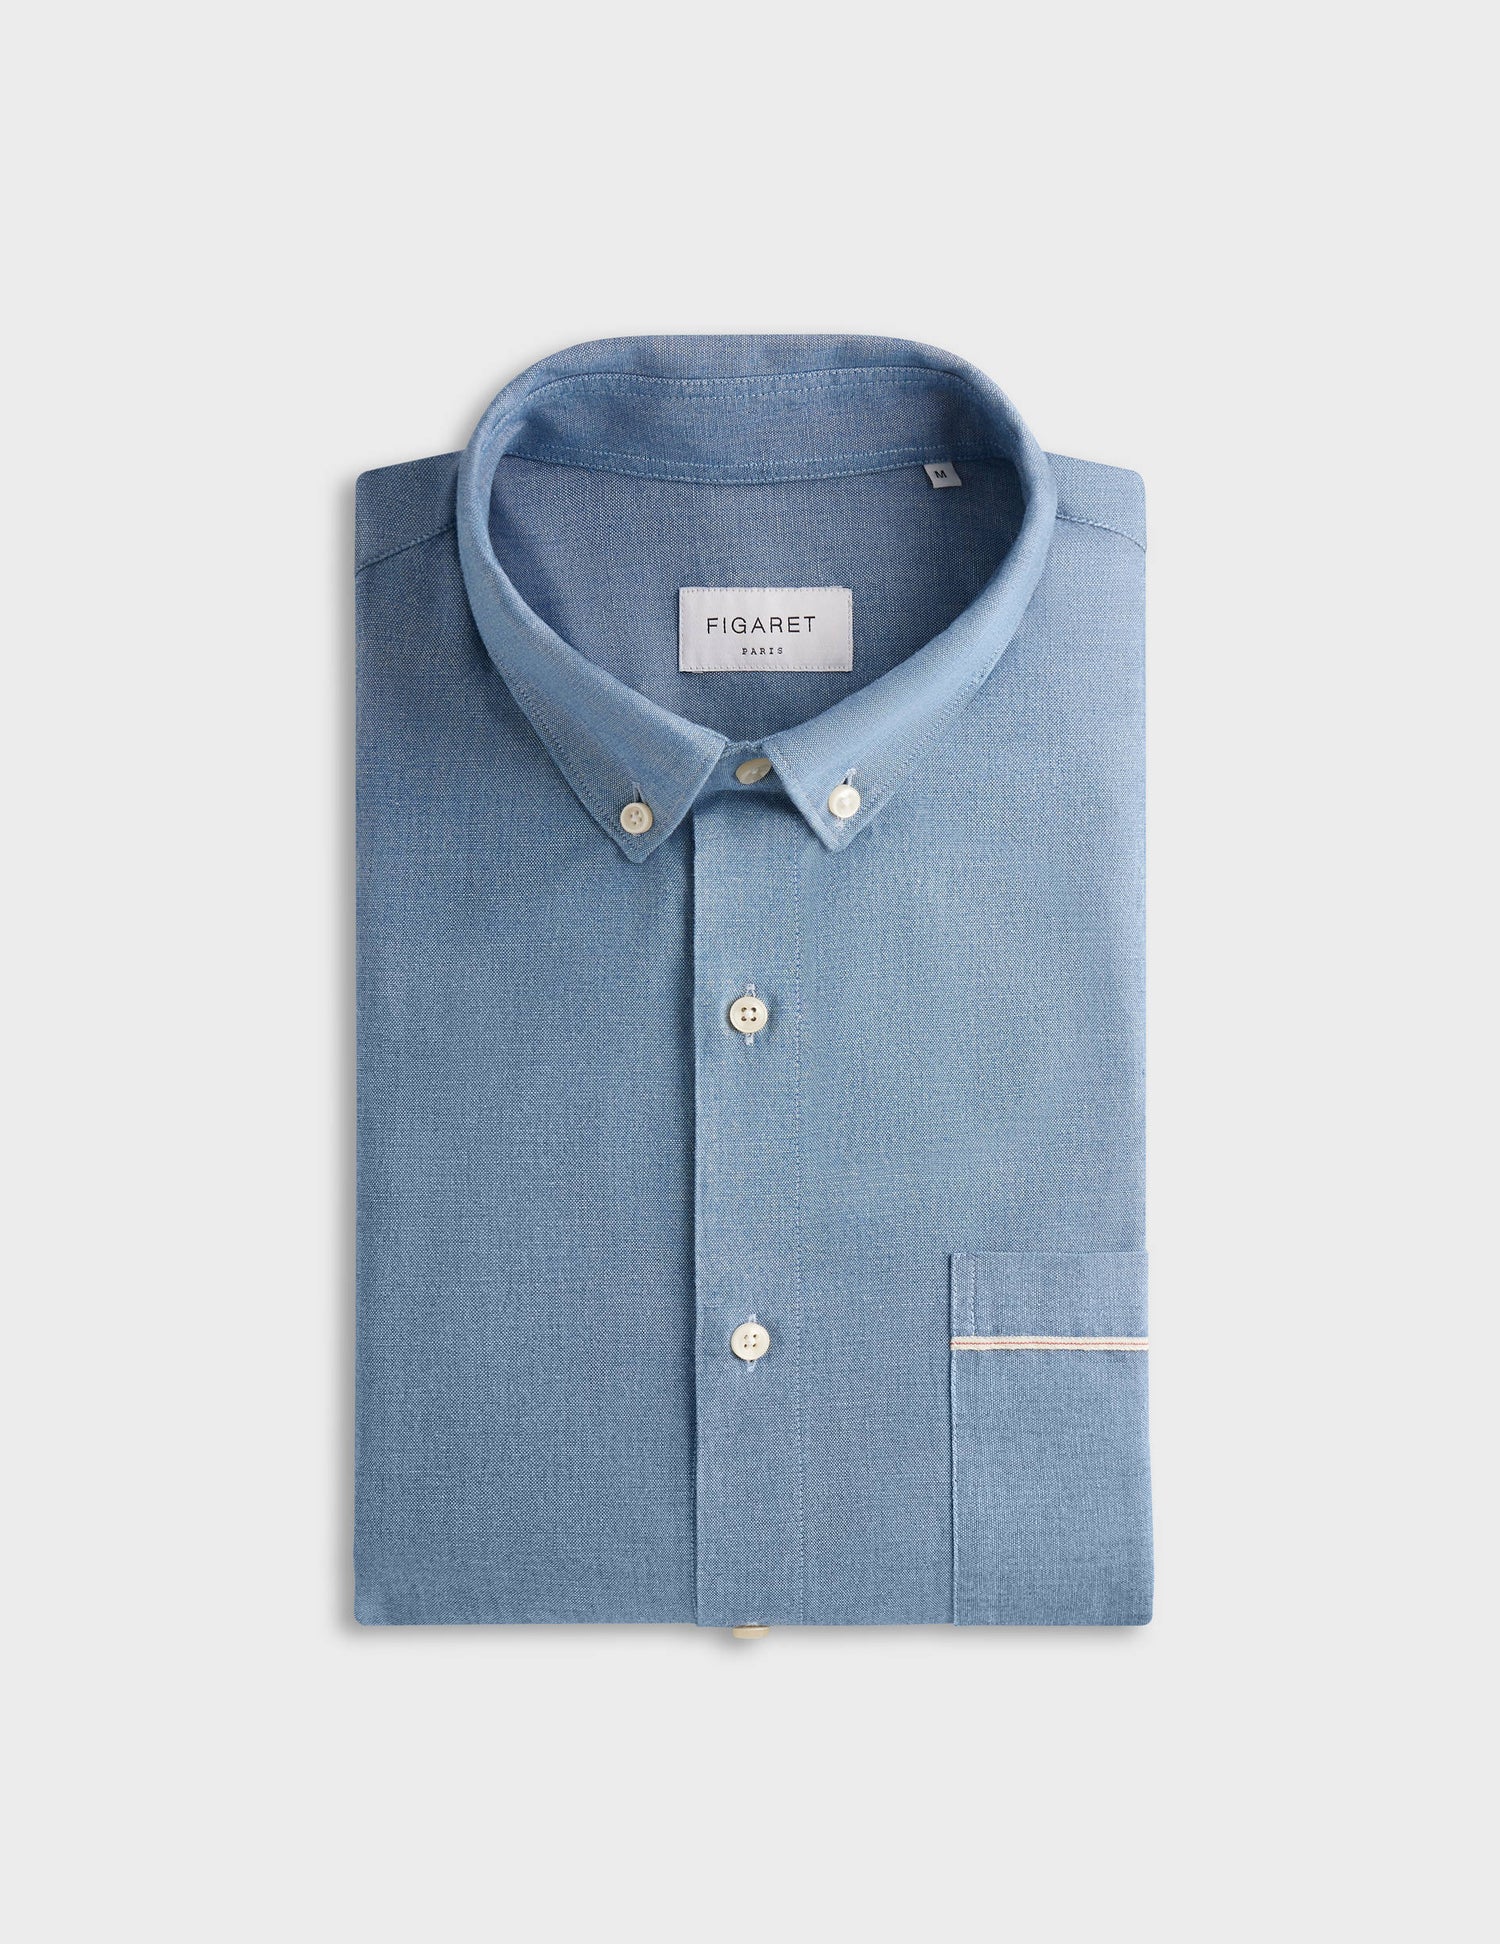 Amaury shirt in blue denim - Chambray - American Collar#6